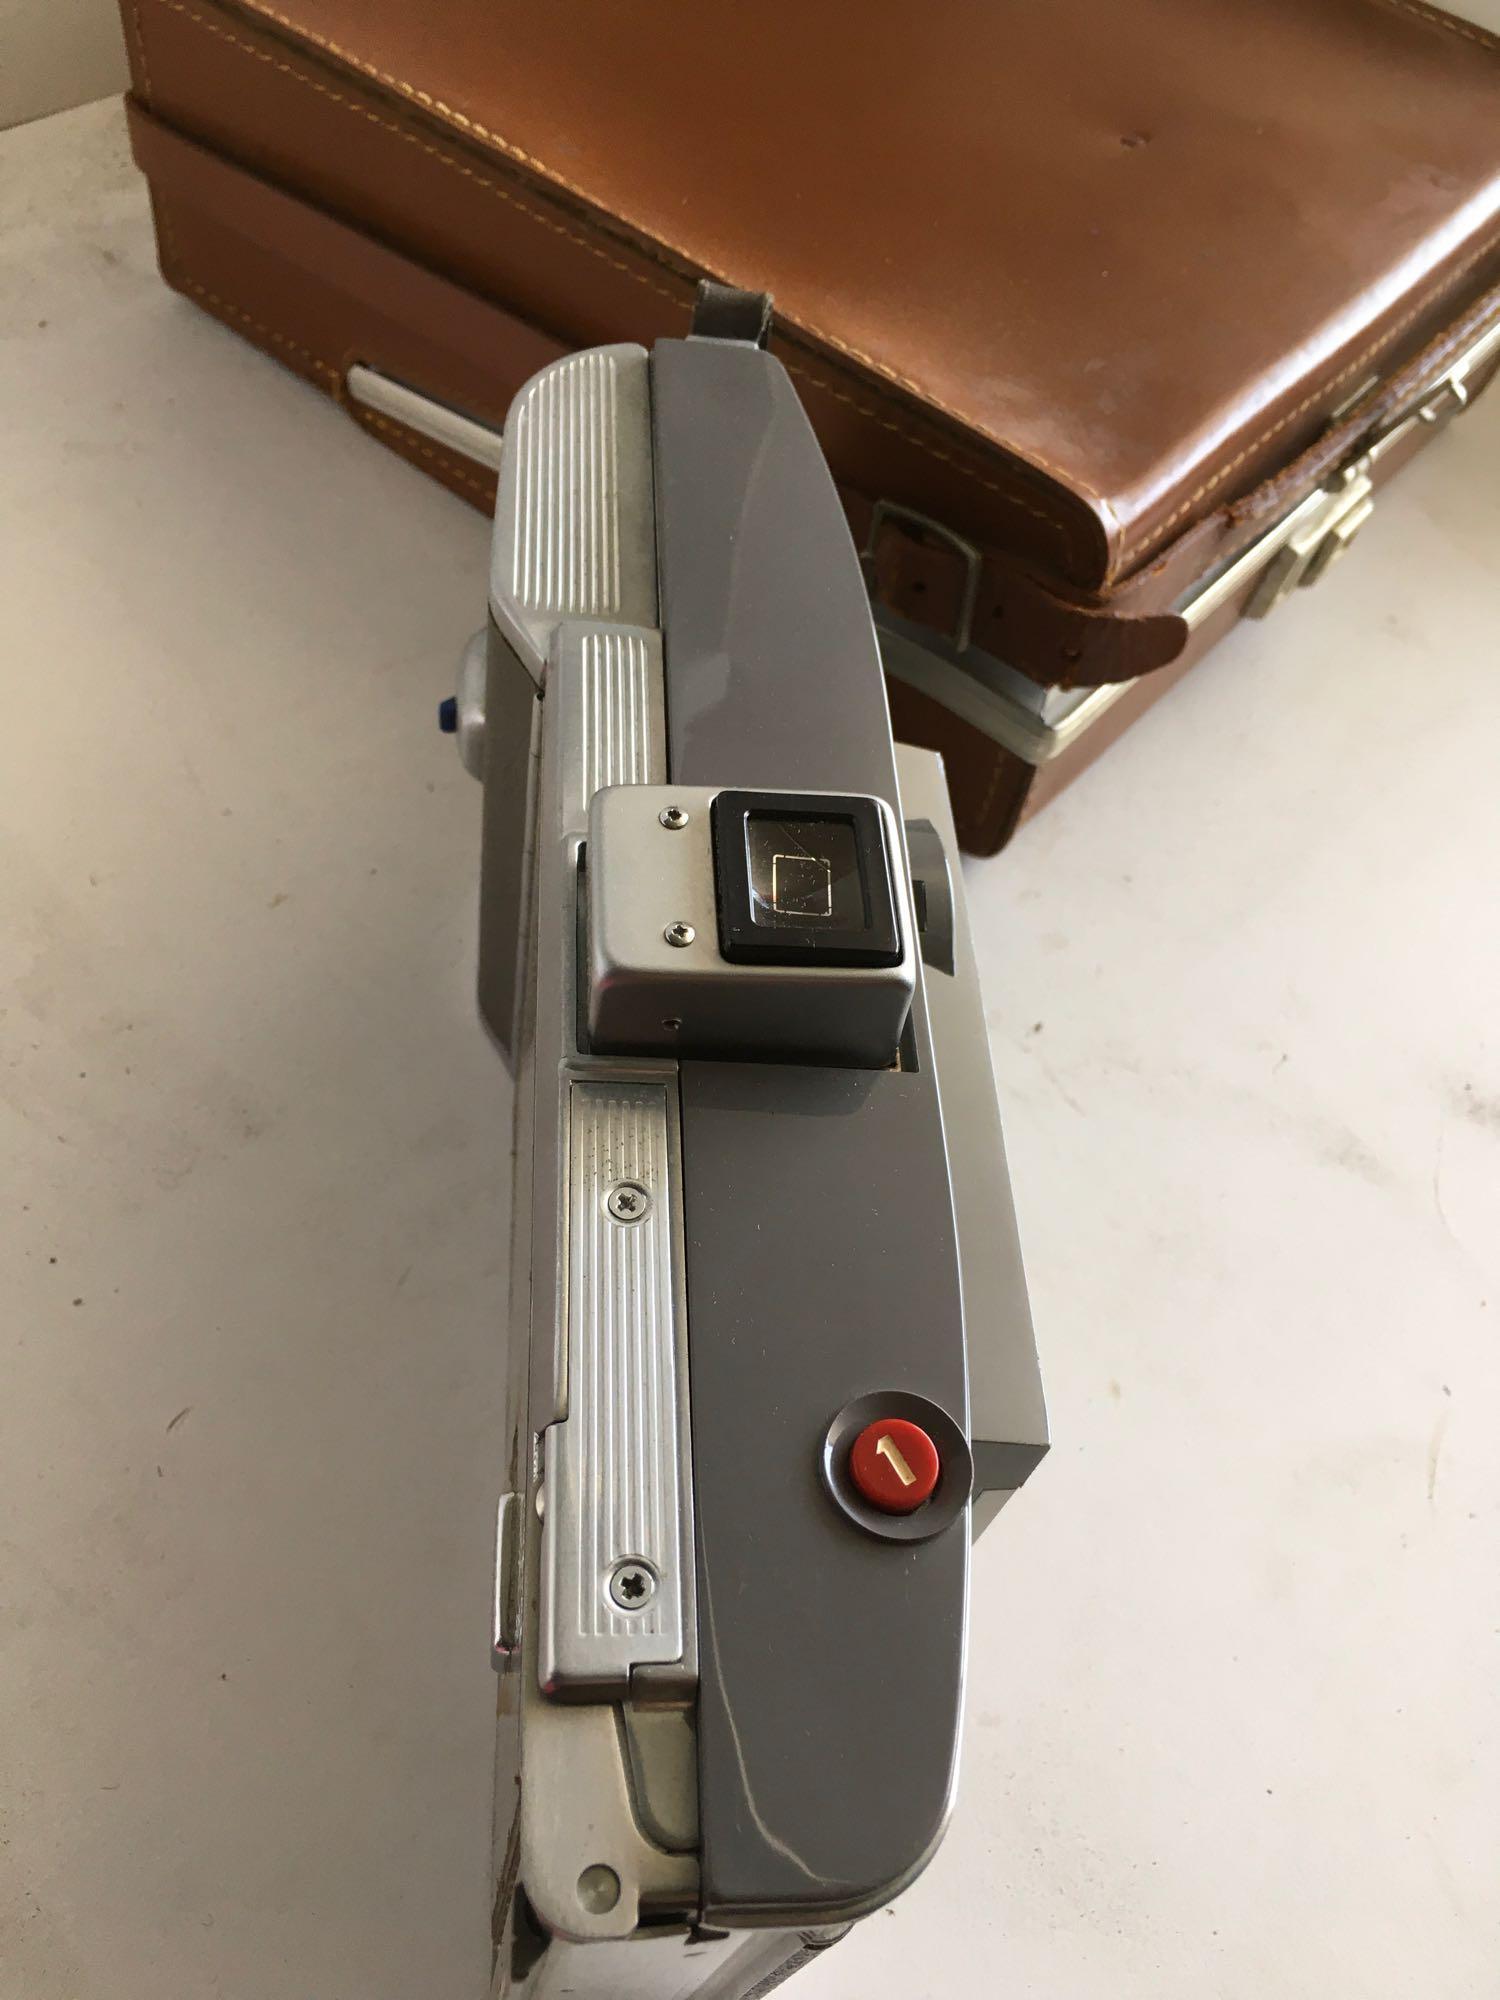 Polaroid vintage land camera model J86 with case